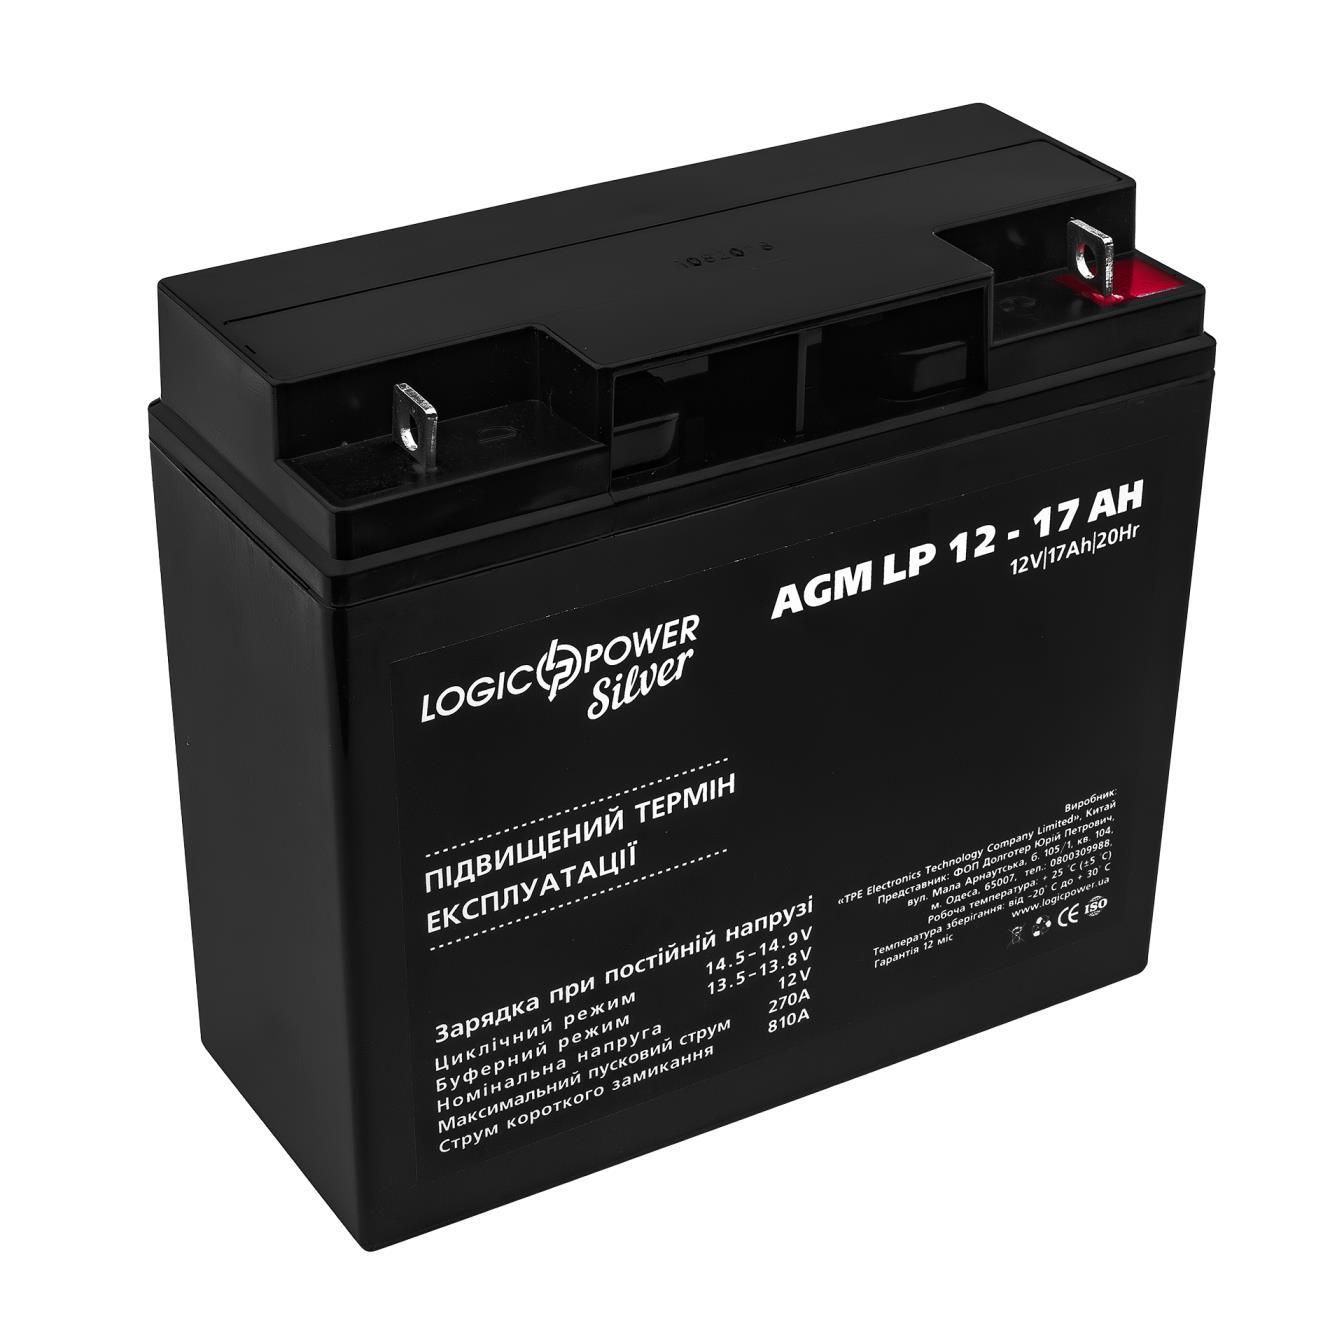 Аккумулятор свинцово-кислотный LogicPower AGM LP 12V - 17 Ah Silver (3329)